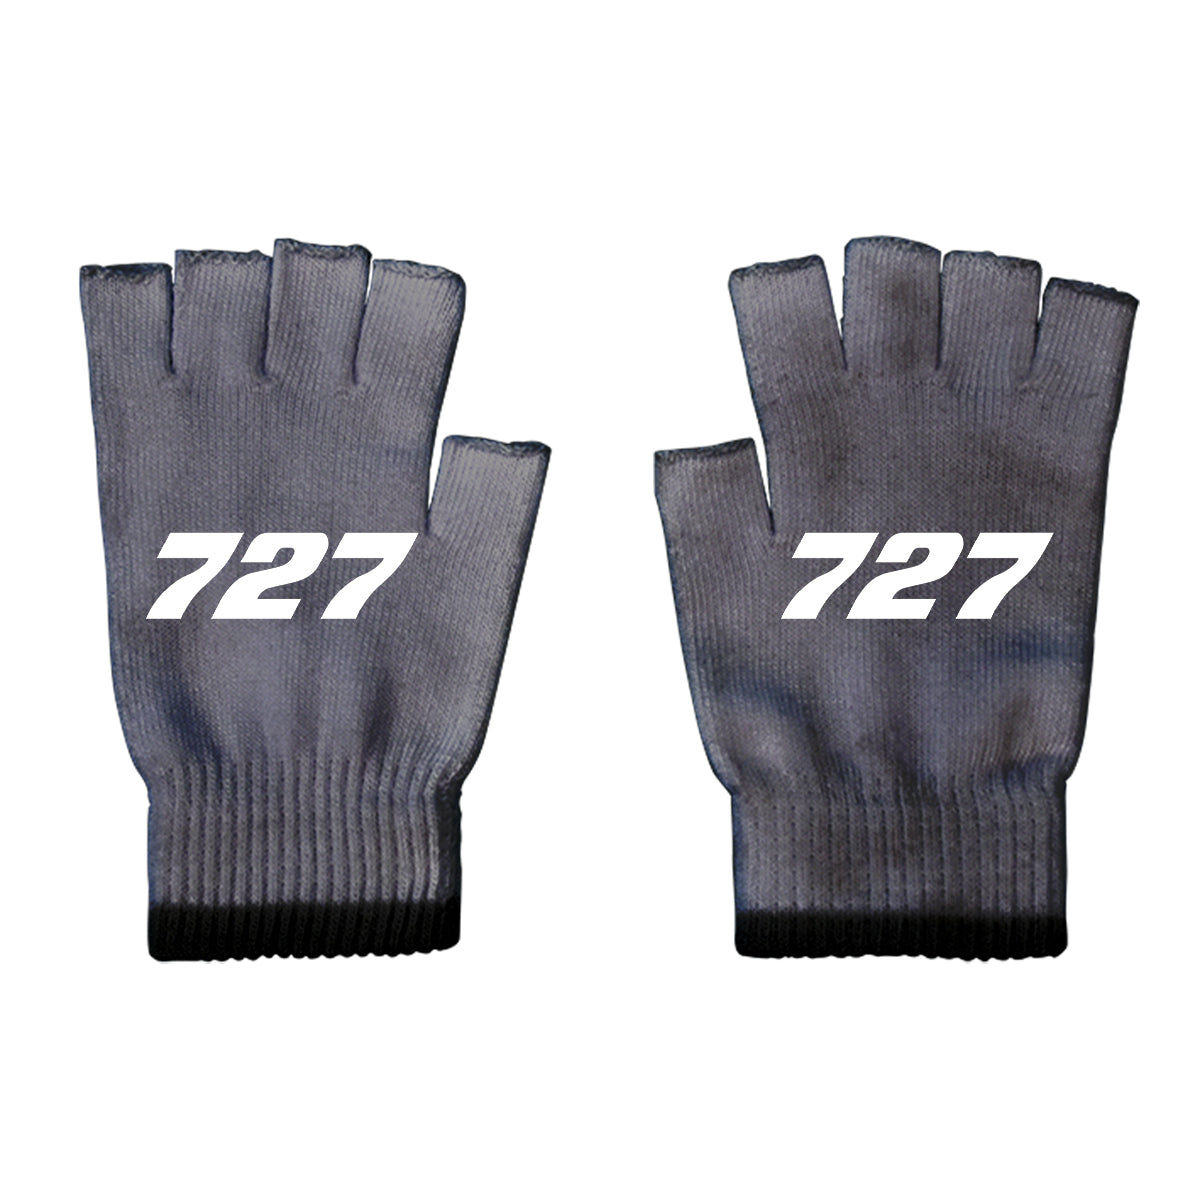 727 Flat Text Designed Cut Gloves